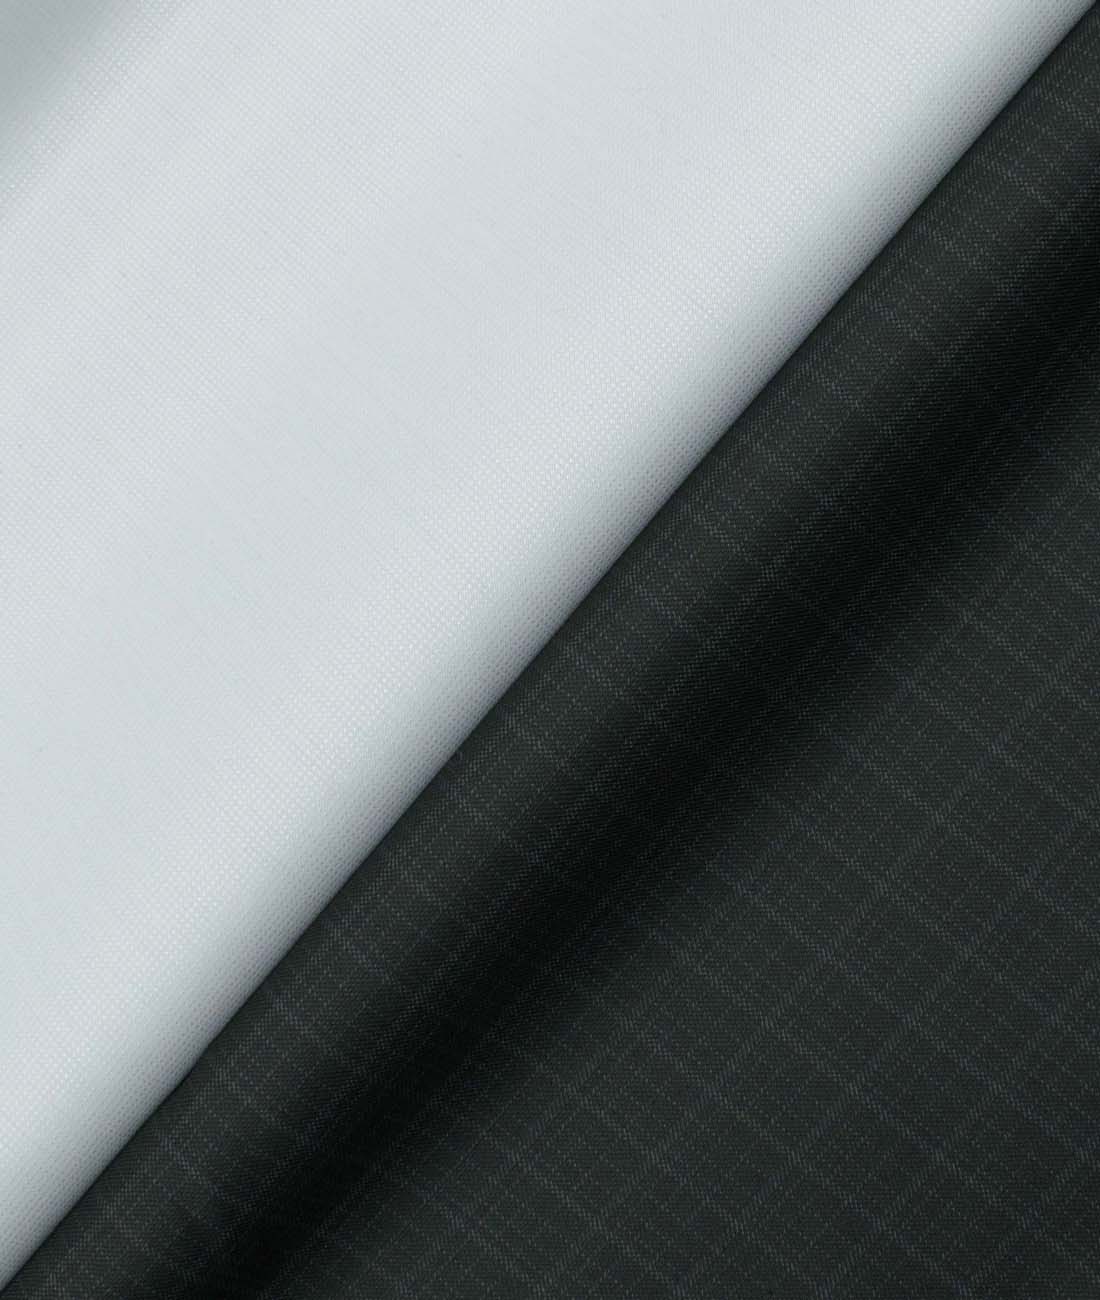 Trouser Fabric Made of Cotton, Polyester, Stretch Blue Mottled 140 Cm Wide  Fabric Matt Melange - Etsy